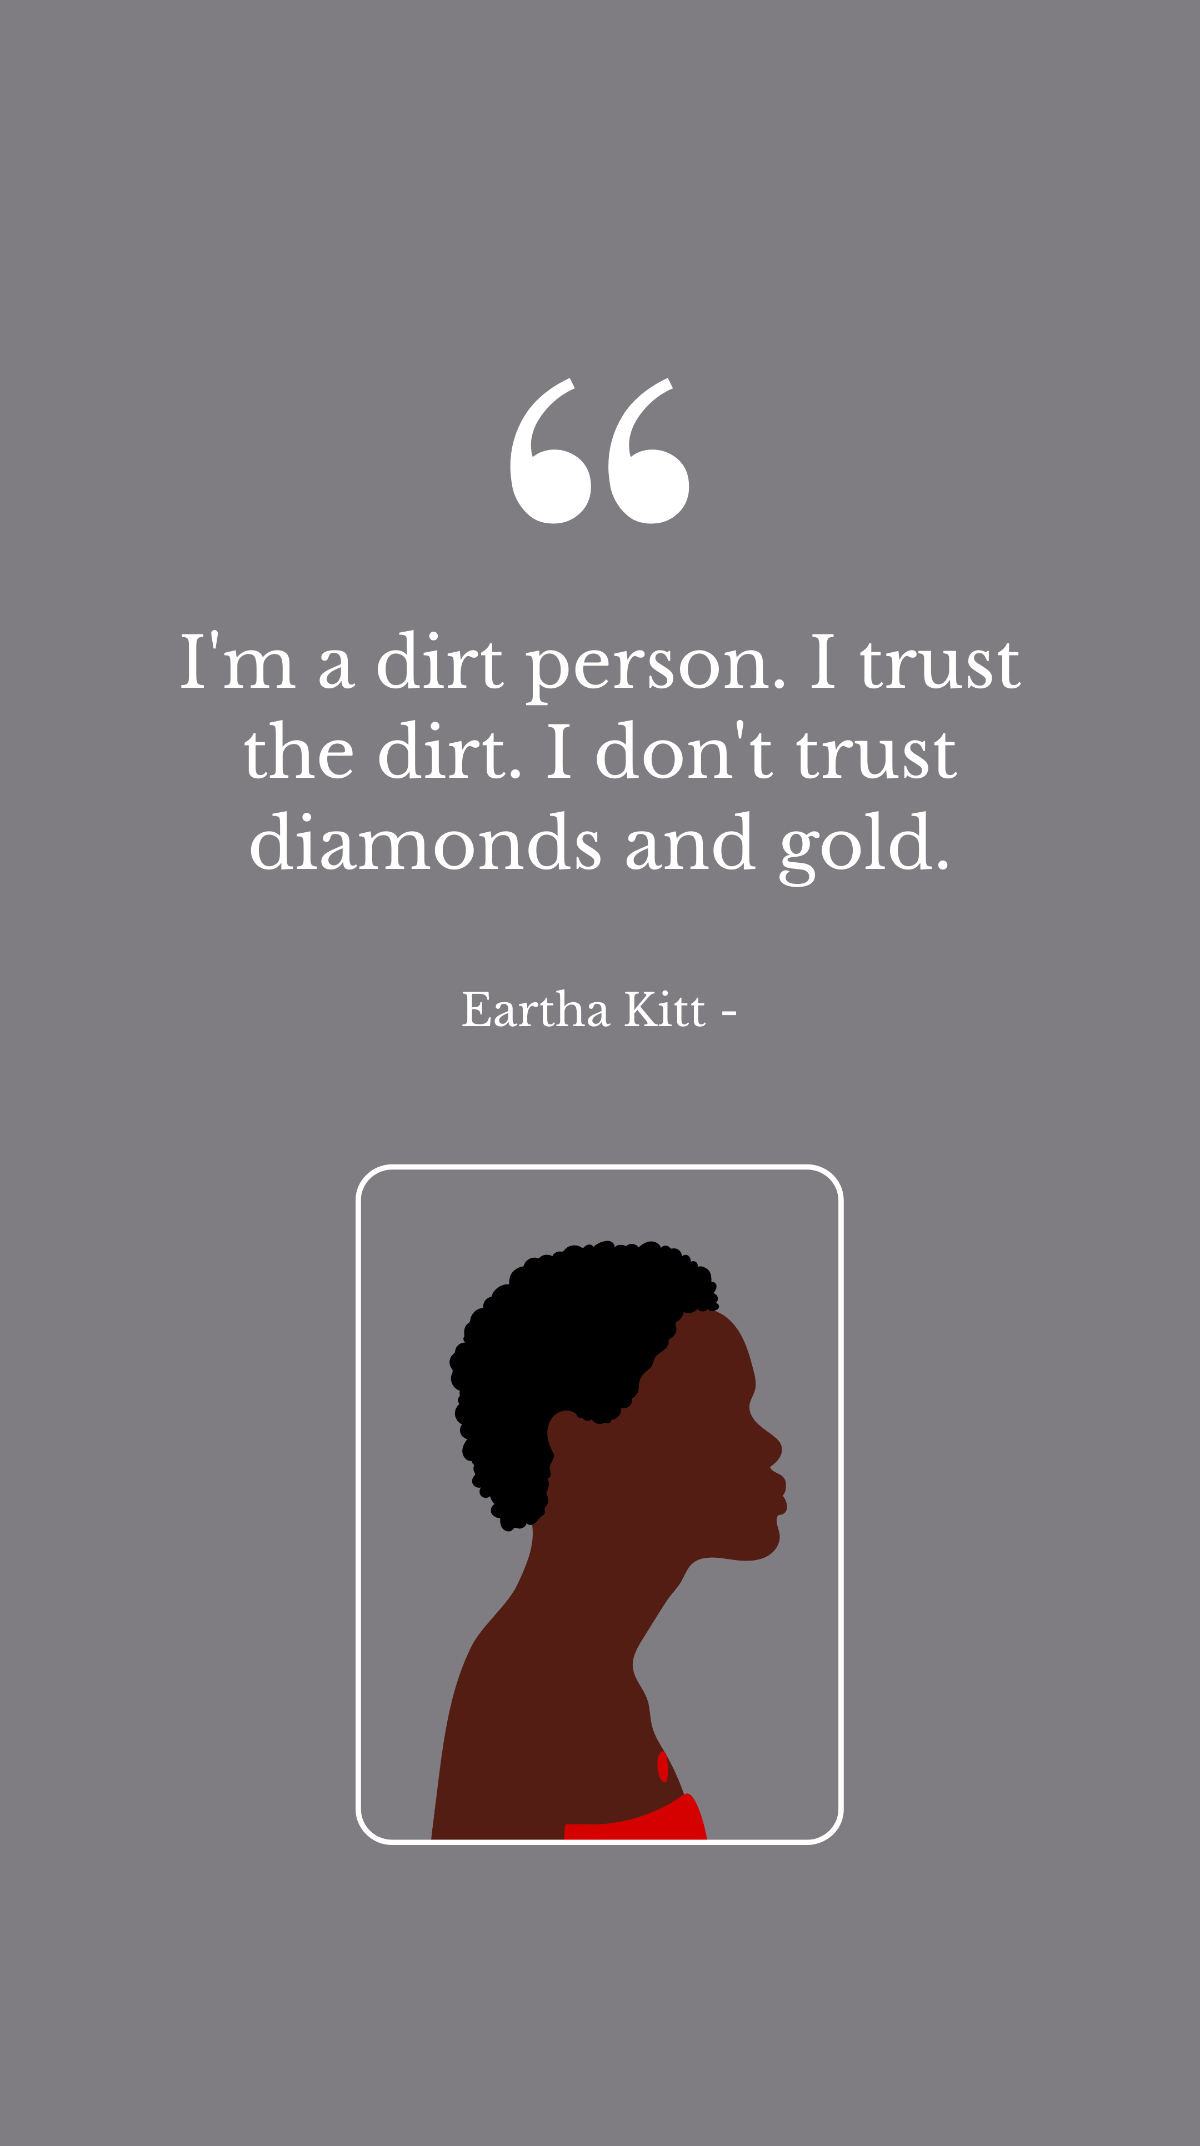 Eartha Kitt - I'm a dirt person. I trust the dirt. I don't trust diamonds and gold. Template